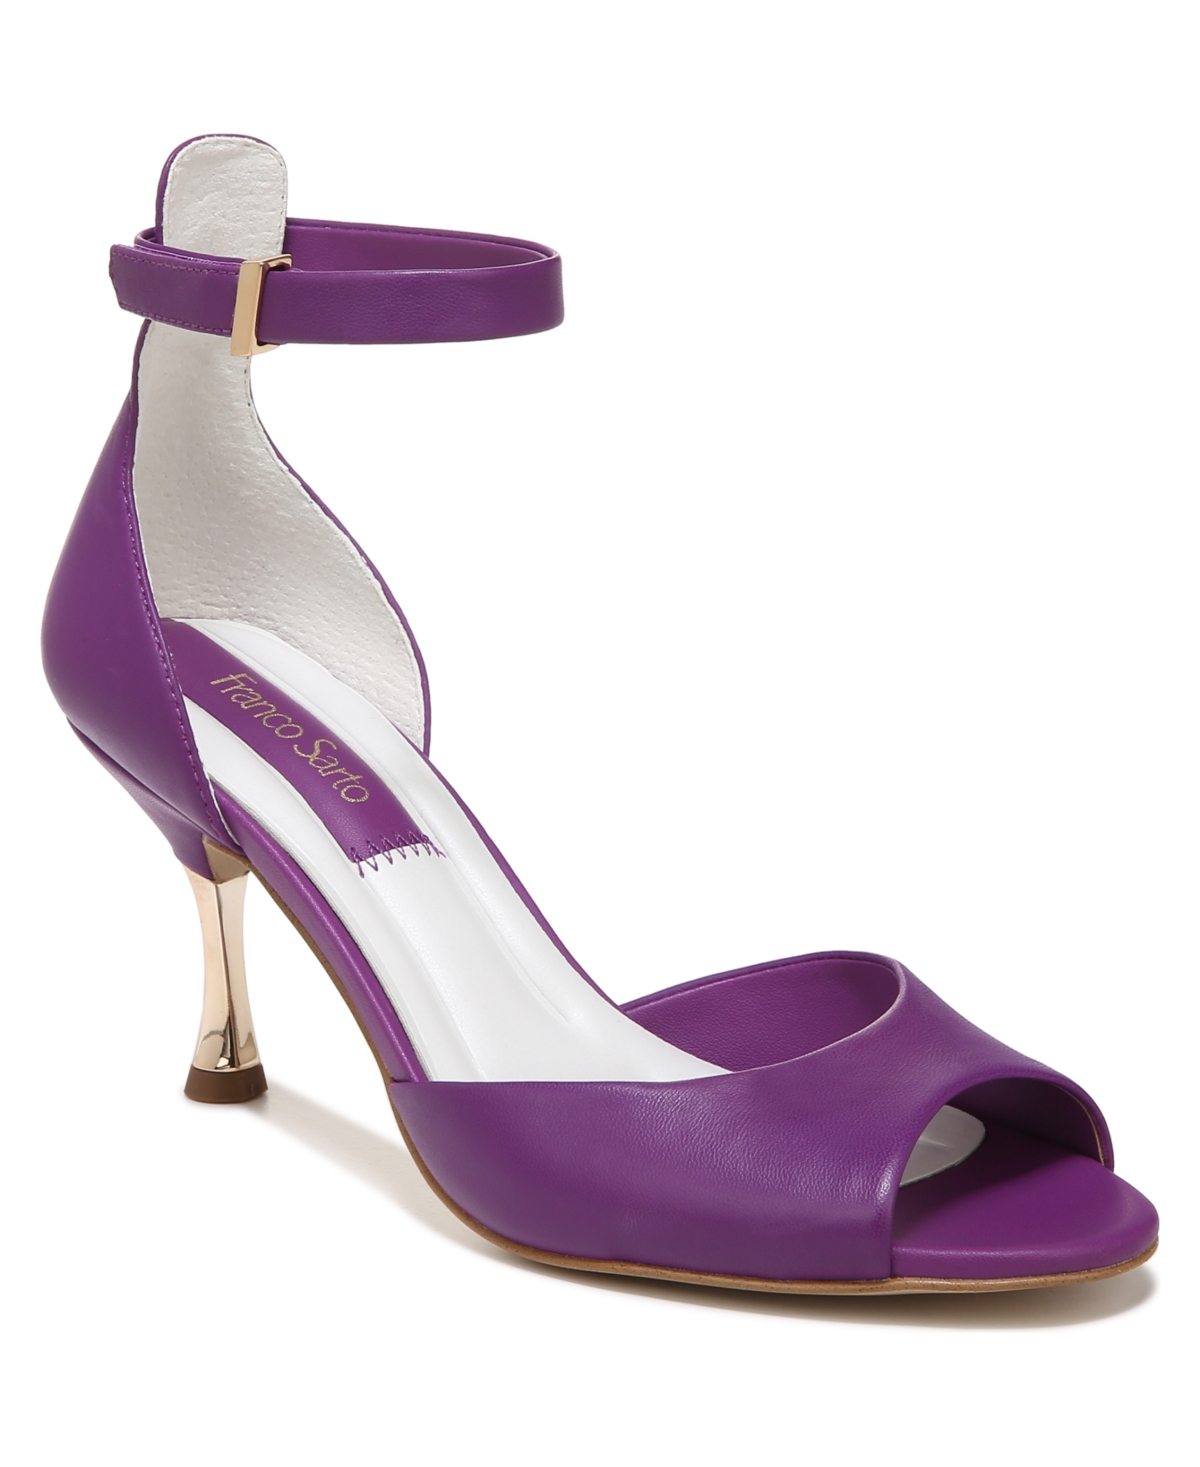 Franco Sarto Rosie Ankle Strap Dress Pumps Women's Shoes